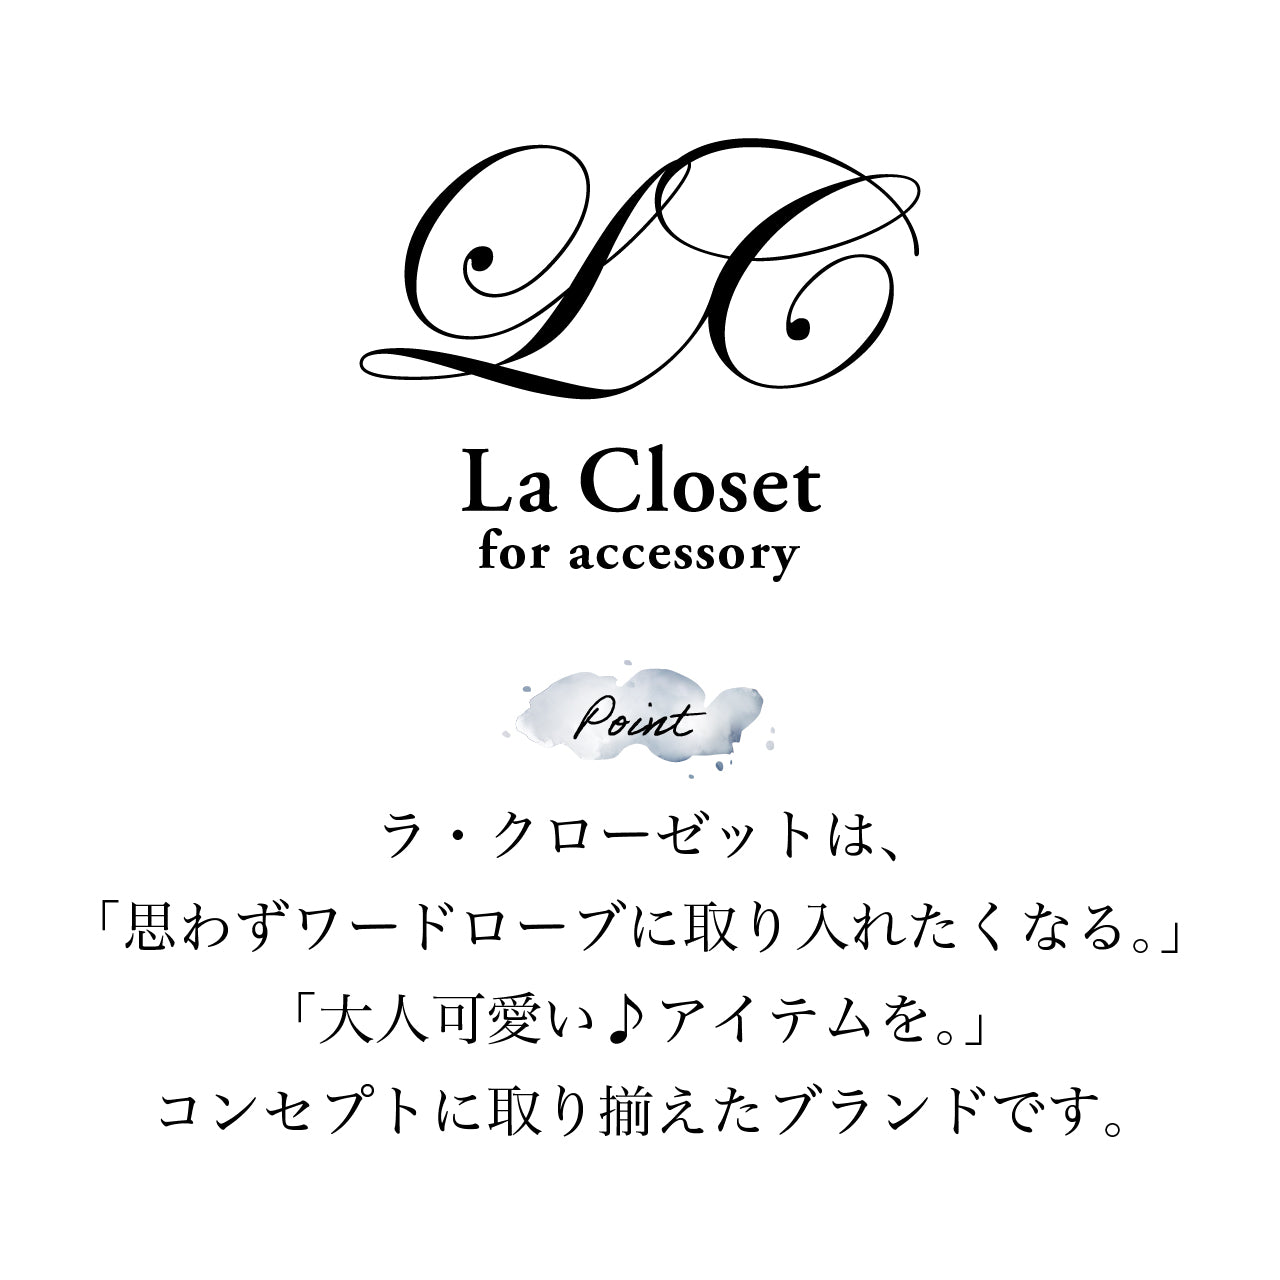 【La Closet】スクエアピアス SILVER925製 シンプル ゴールド ピアス シルバーピアス 純銀 sv925